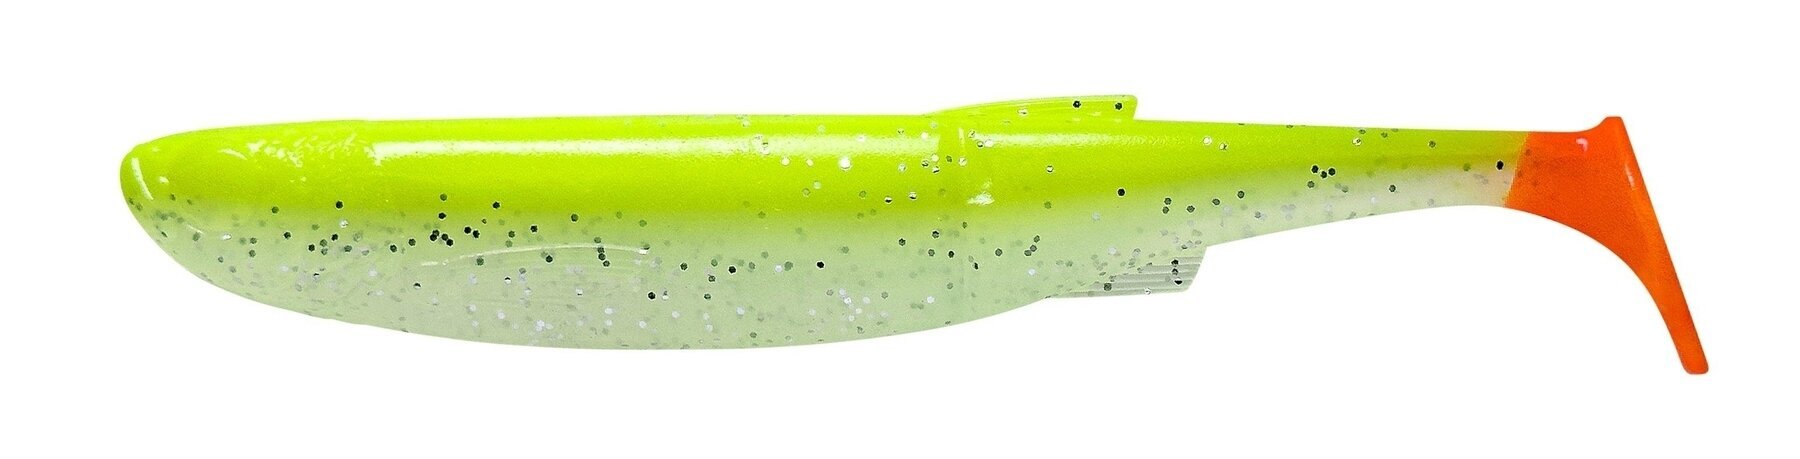 Isca de borracha Savage Gear Craft Bleak Clam 5 pcs Lemon Glow Firetail 8,5 cm 4,2 g